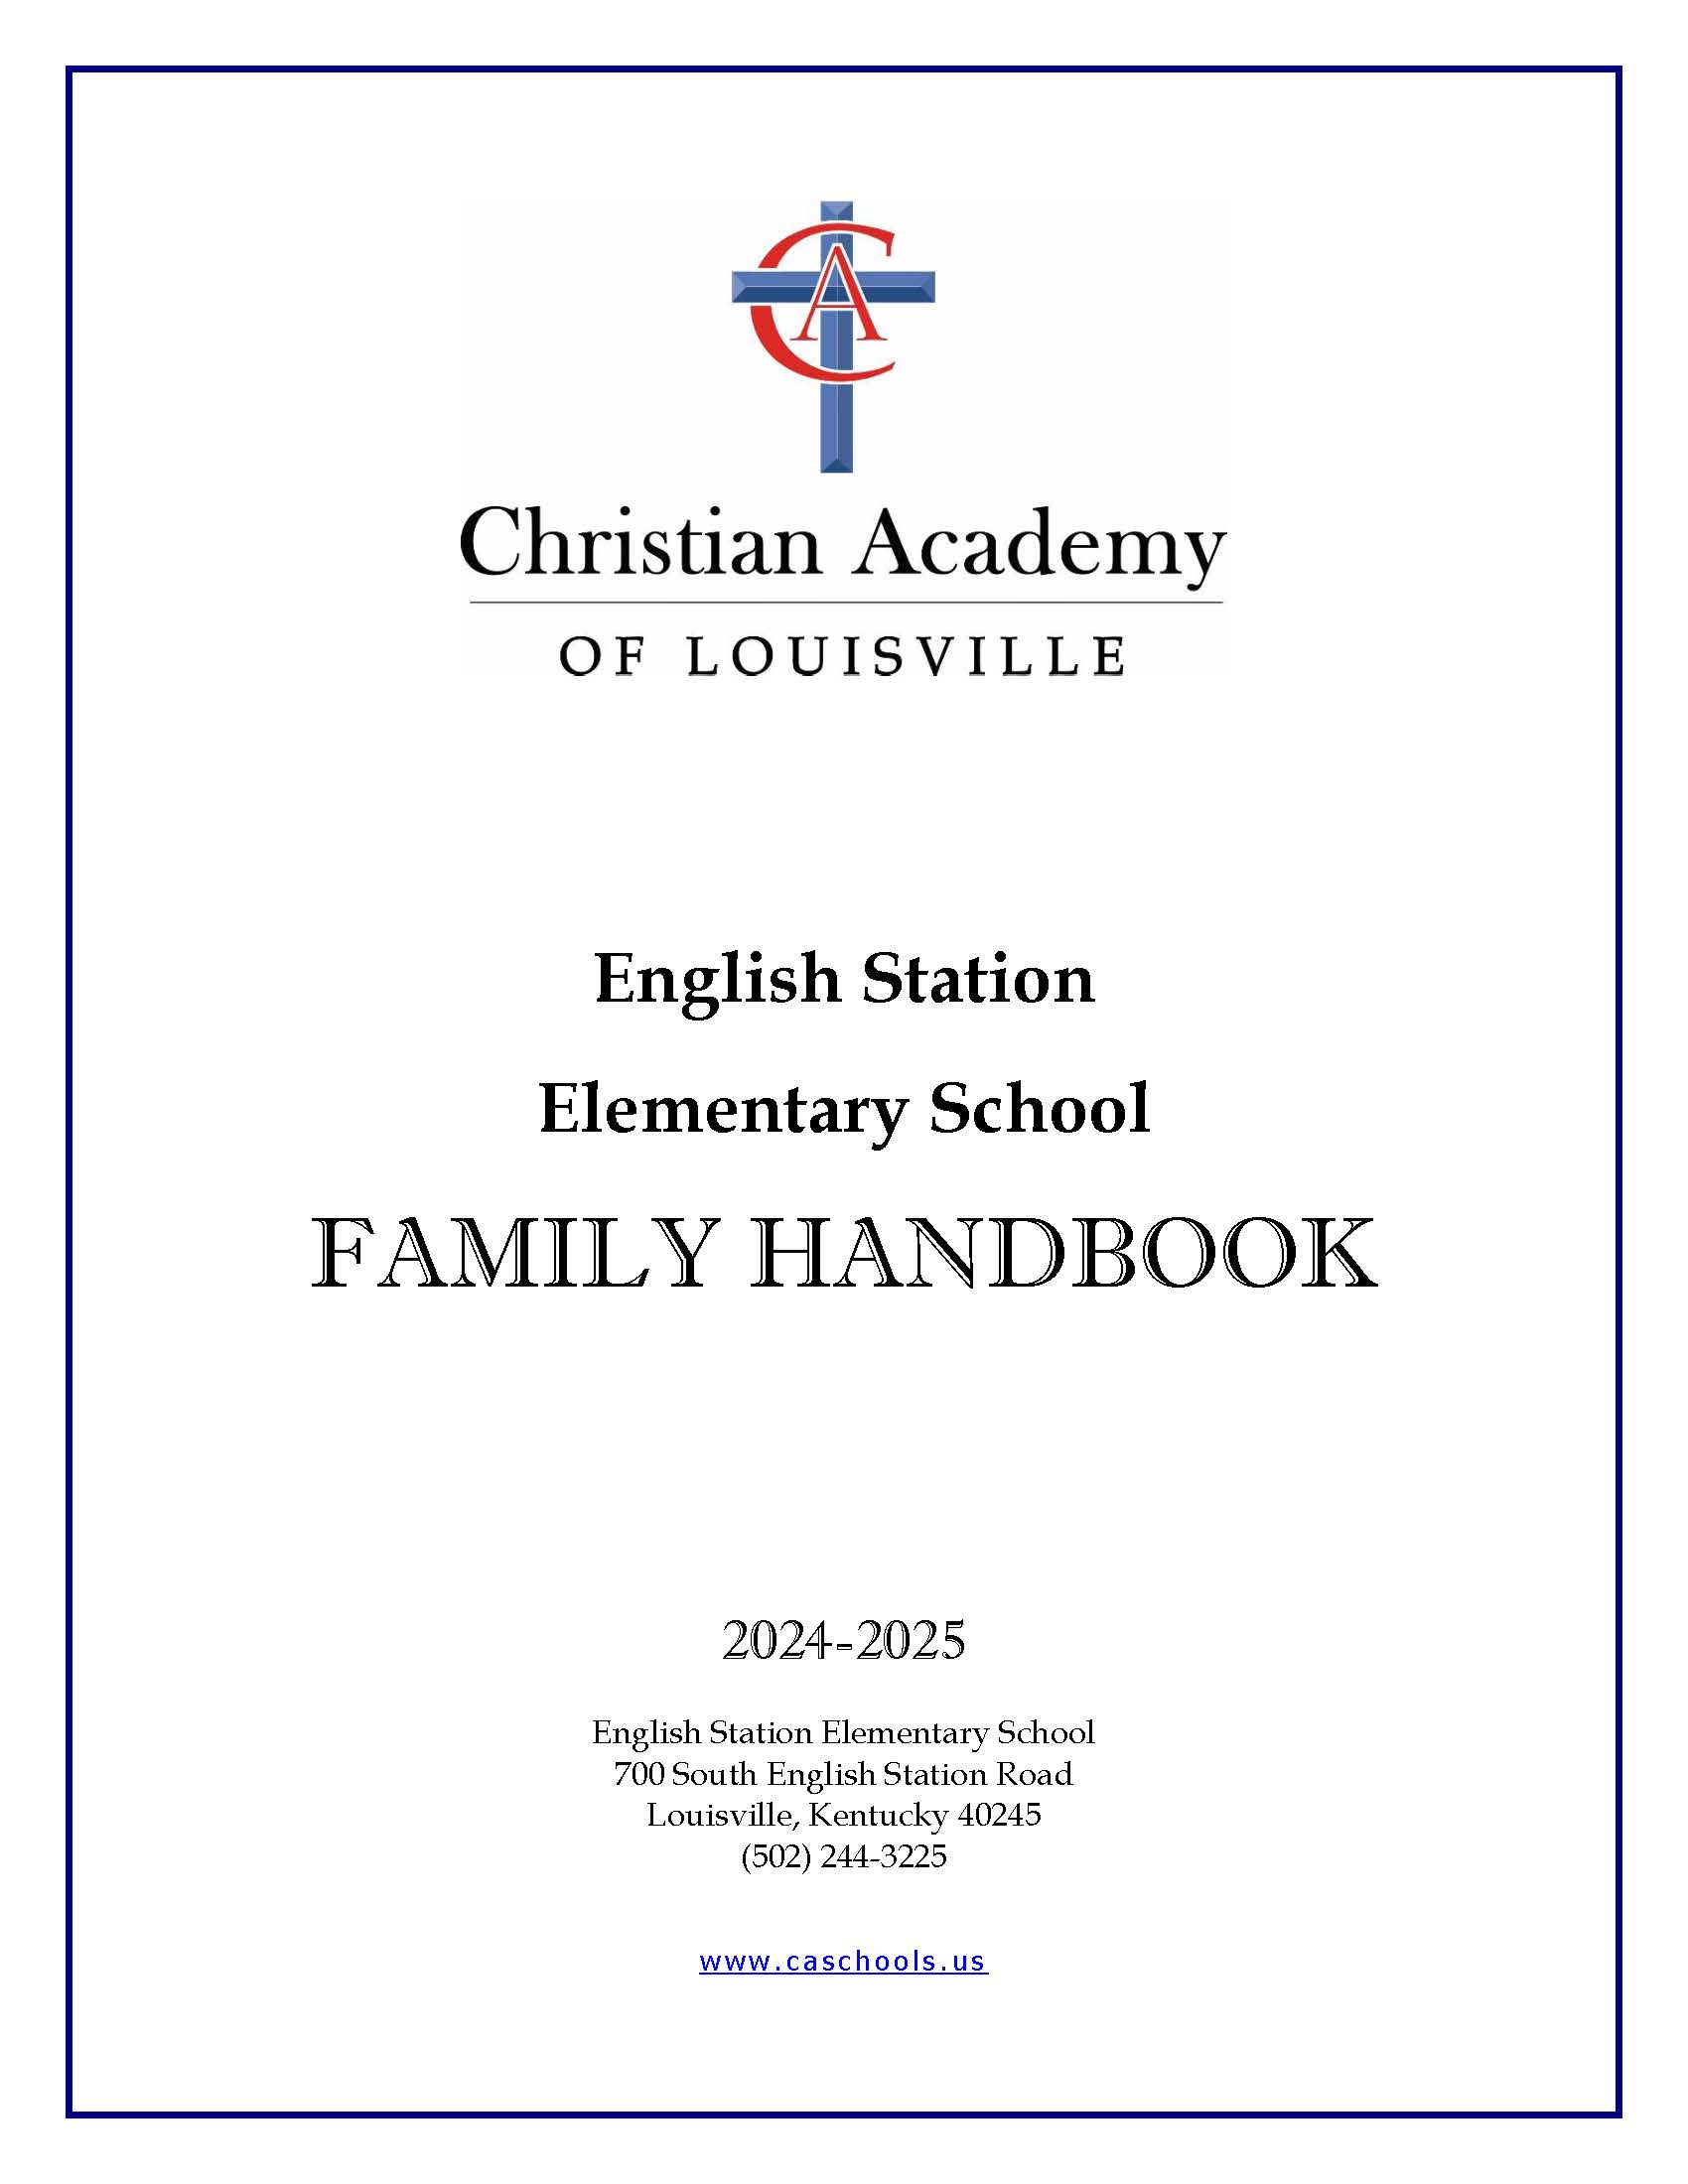 Christian Academy School System | Christian Academy of Louisville | English Station Elementary | 2024-2025 Handbook